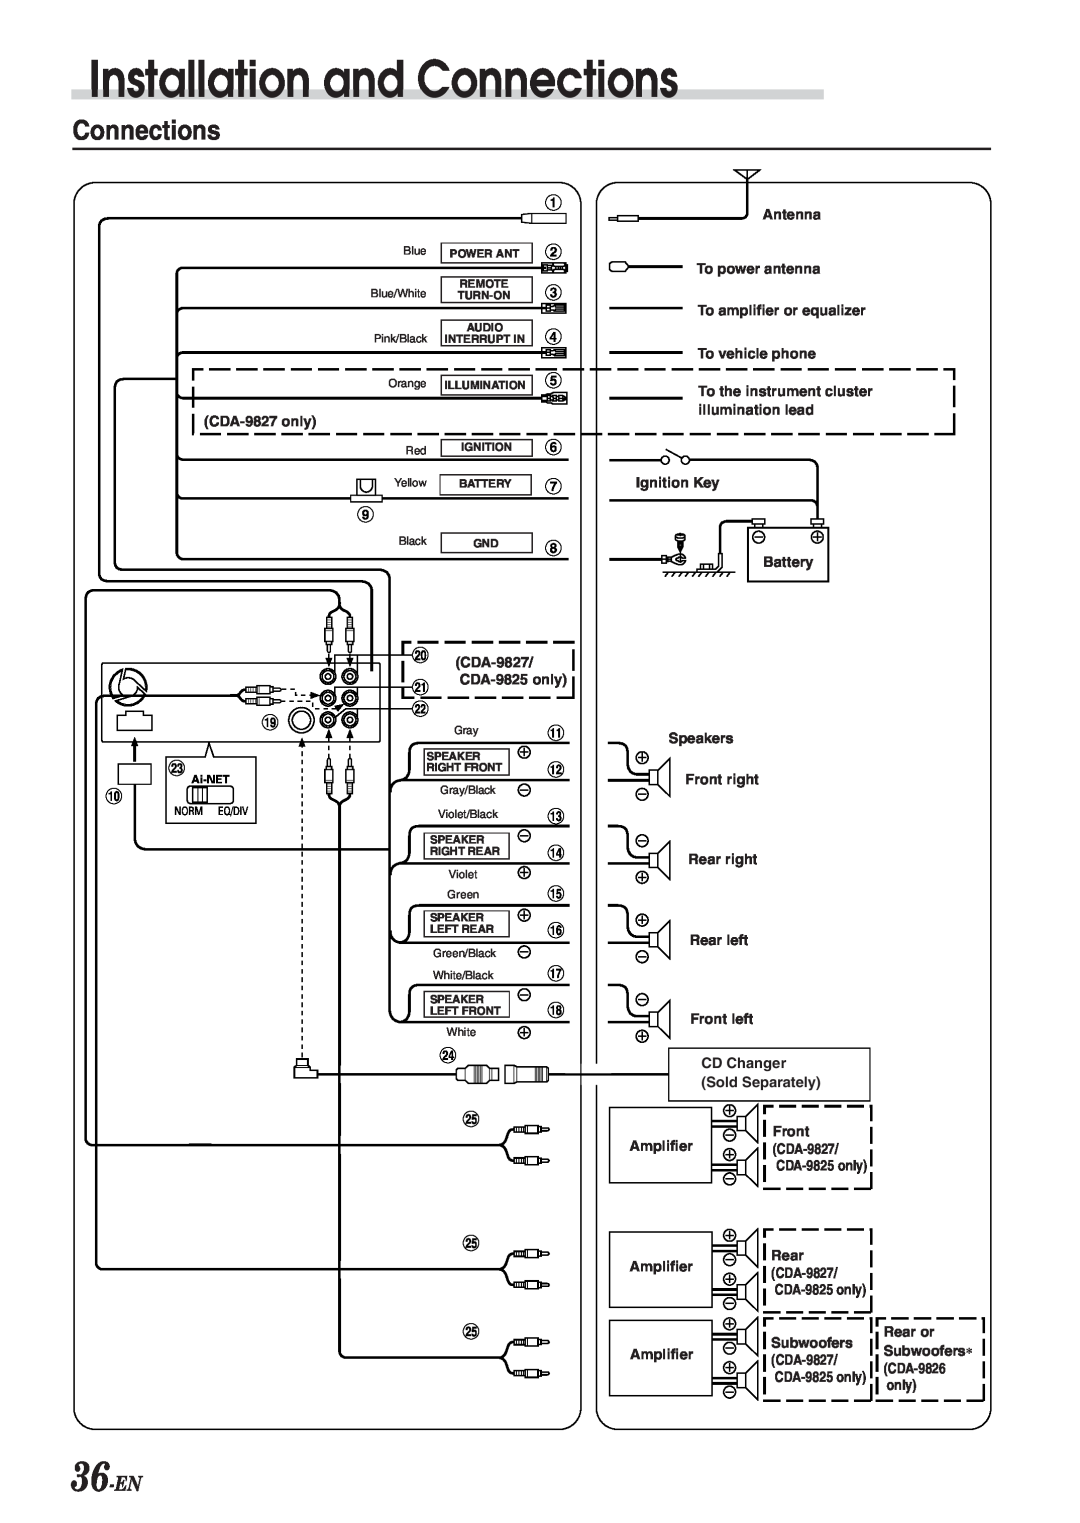 Alpine cda-9825, CDA-9827, CDA-9826 owner manual 36-EN, Installation and Connections 